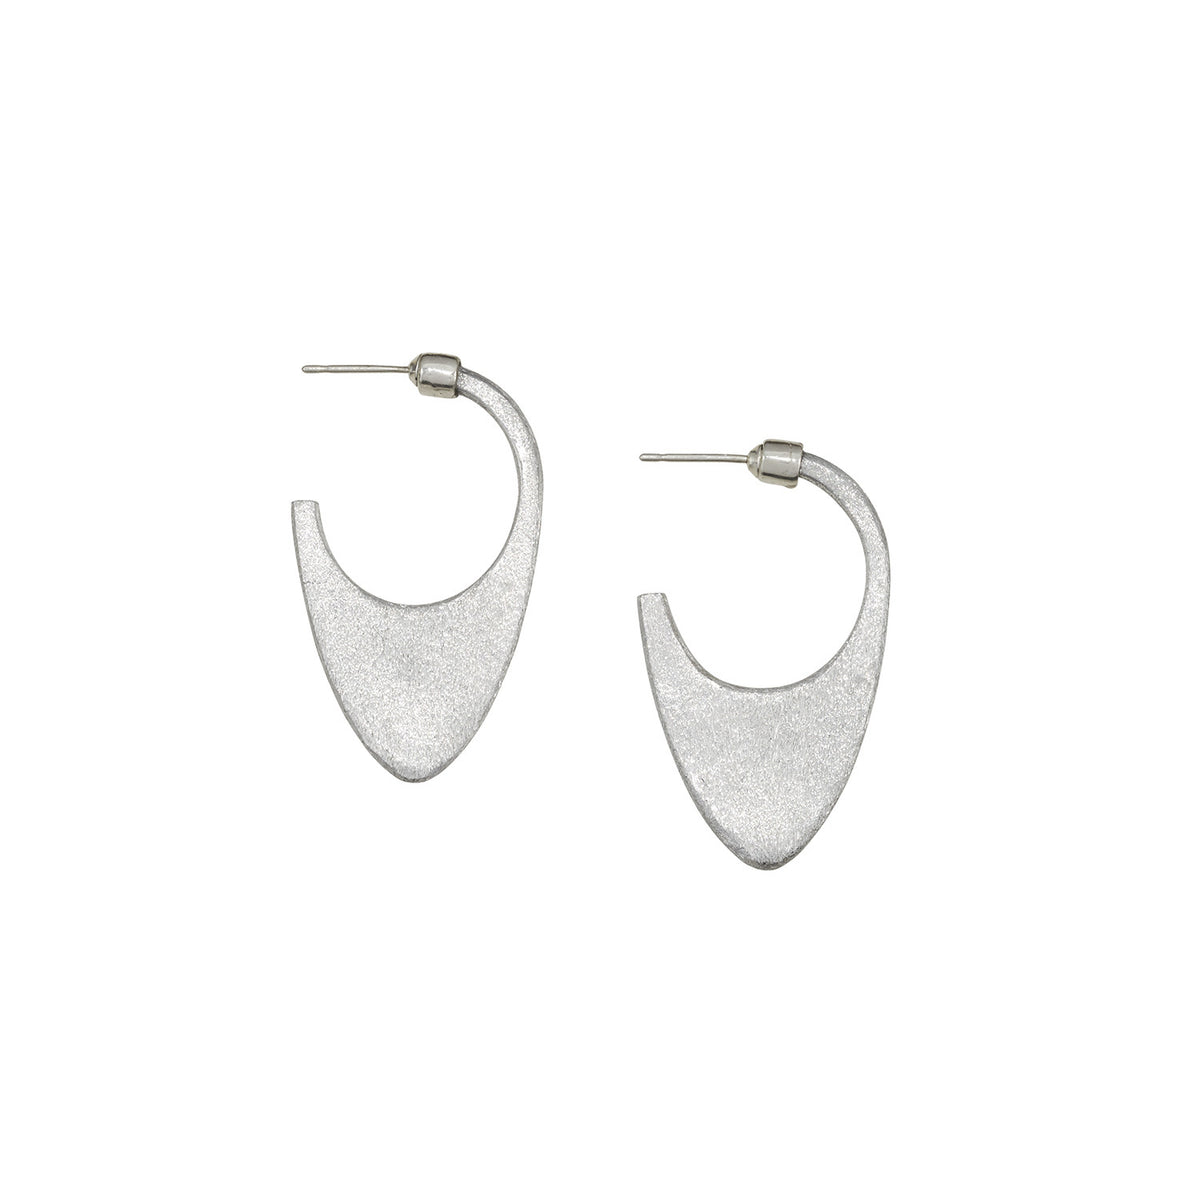 Shop our inspired earrings 😍 #buchonashit #inspiredjewelry